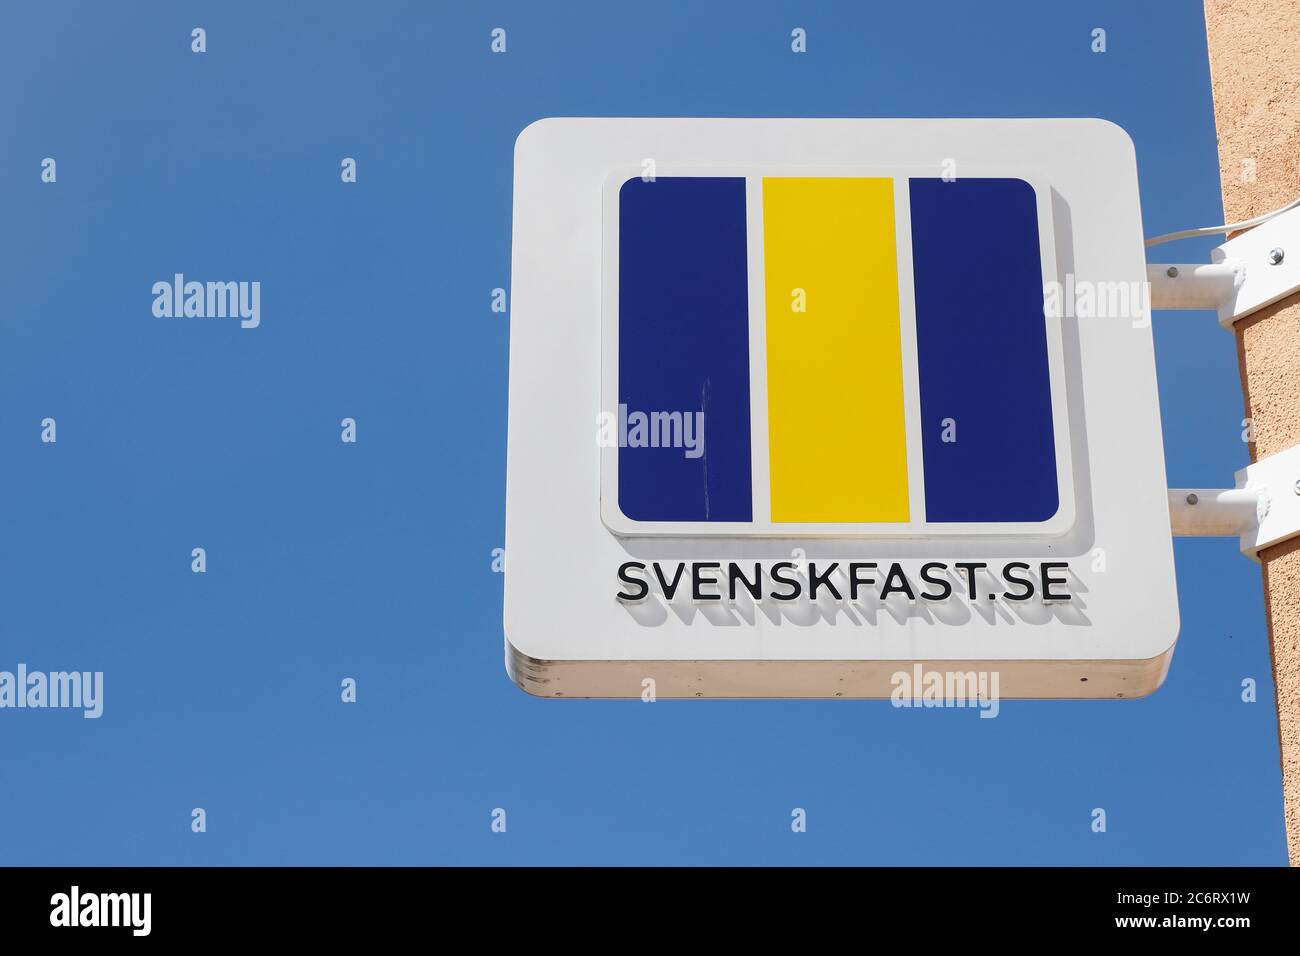 Fagersta, Sweden - July 10, 2020: The real estate agent Svensk Fastighetsformedling office sign. Stock Photo